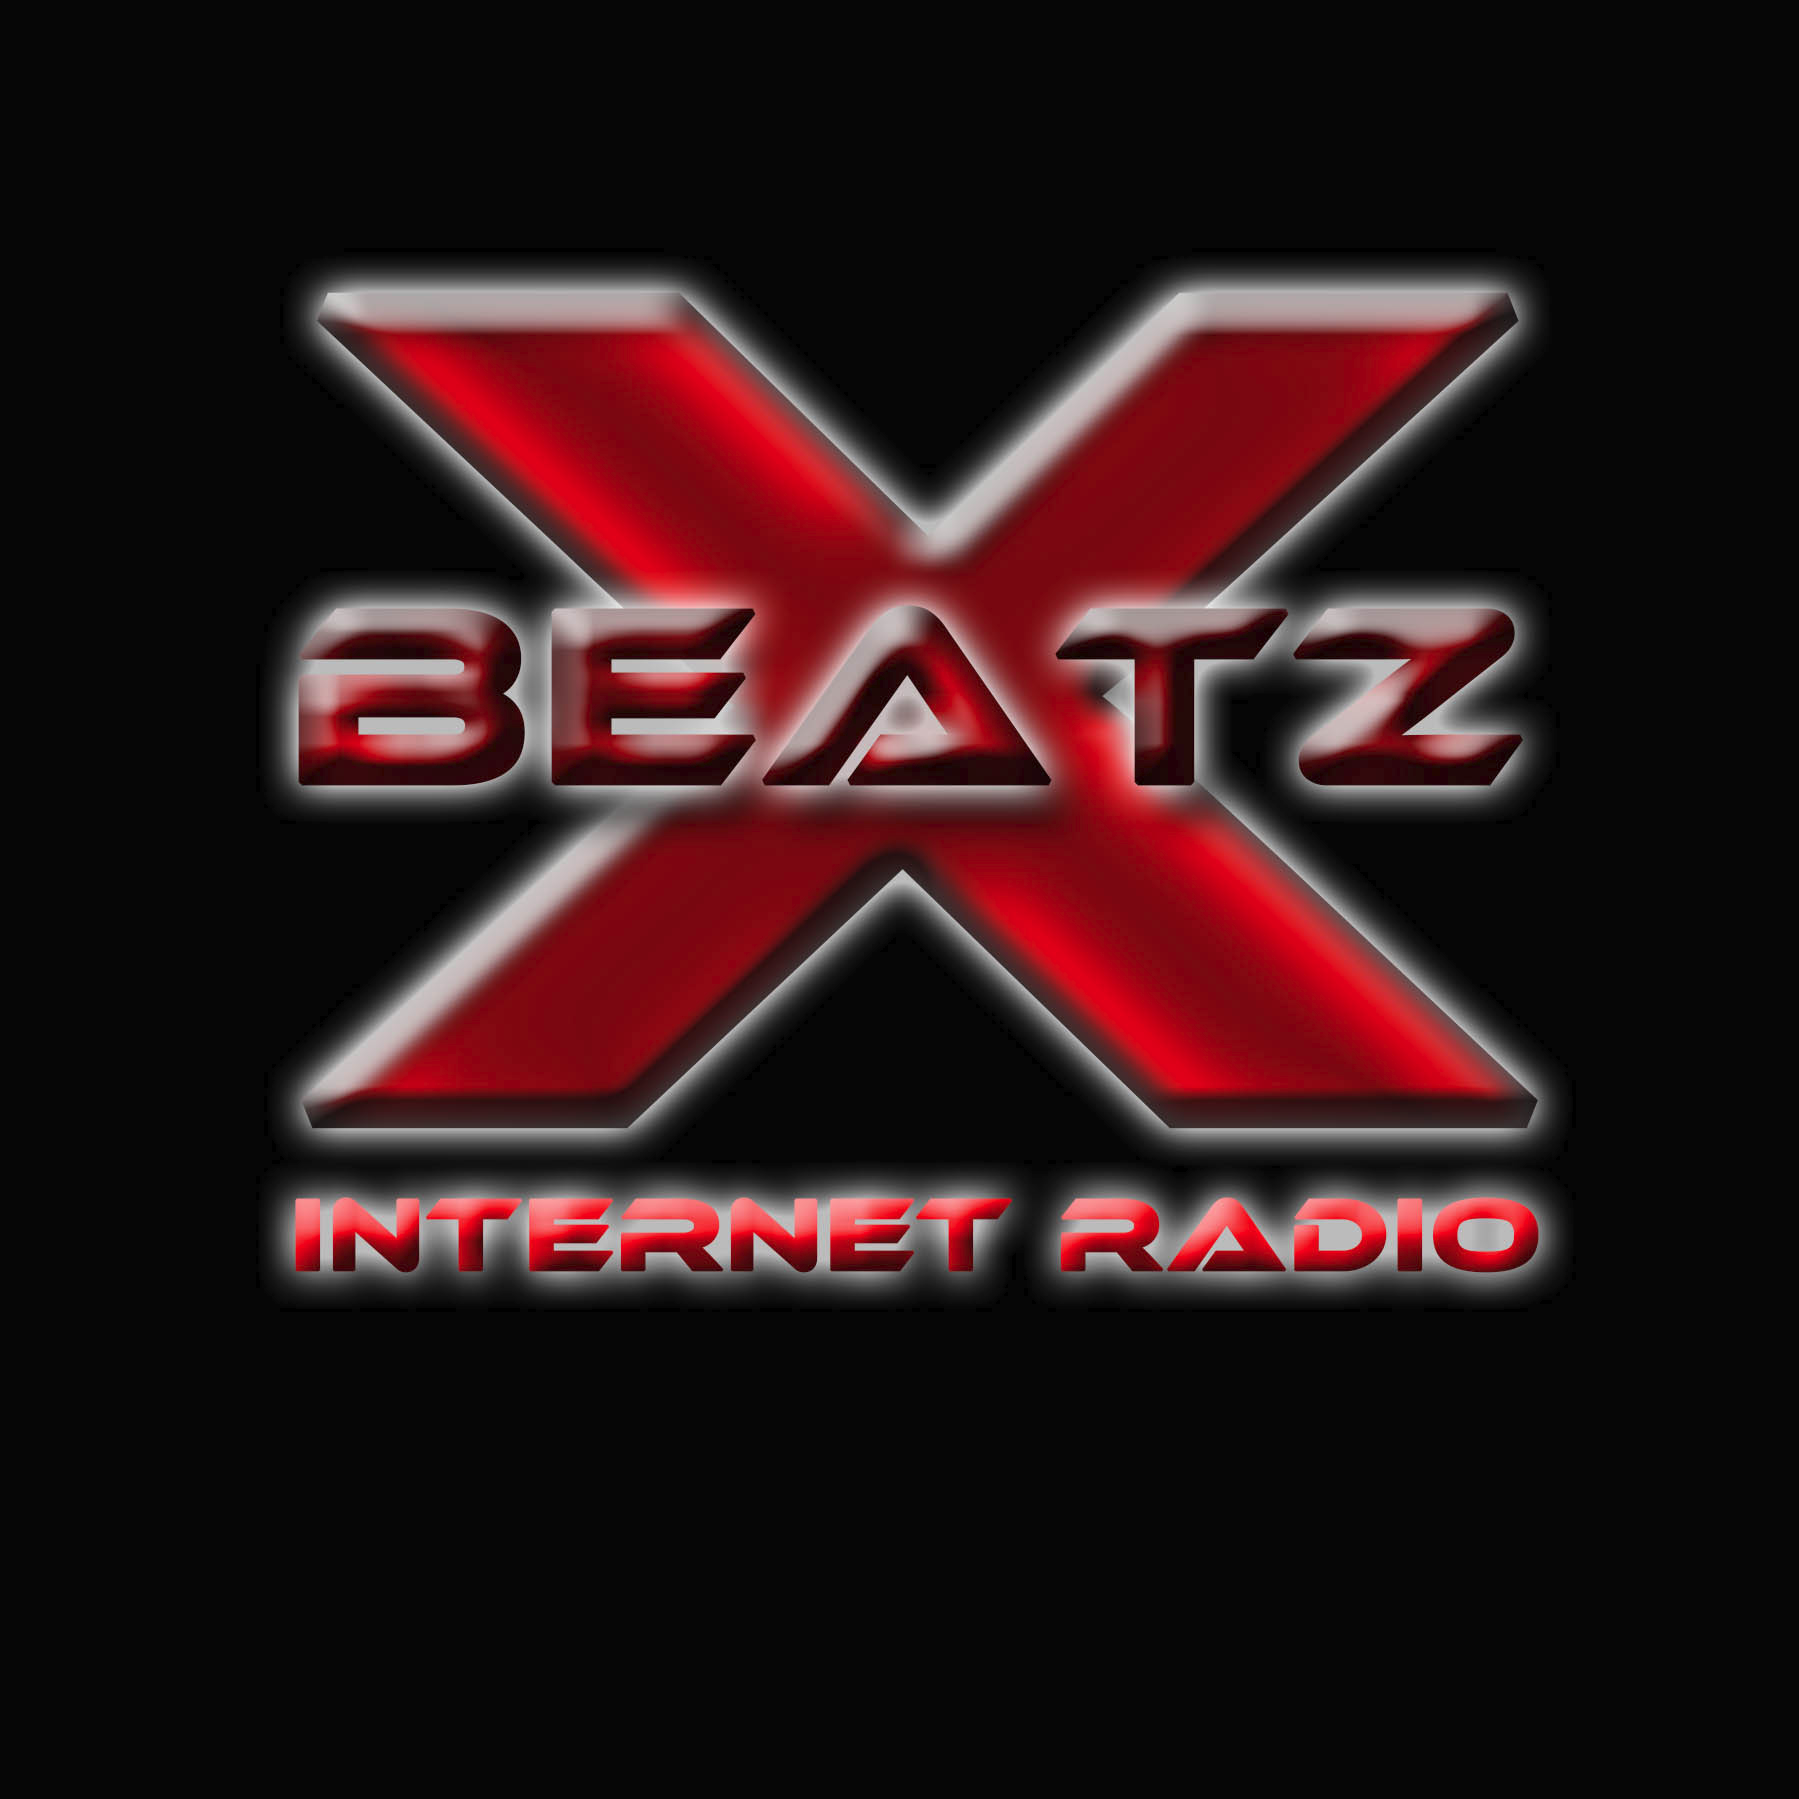 Xbeatz Internet Radio